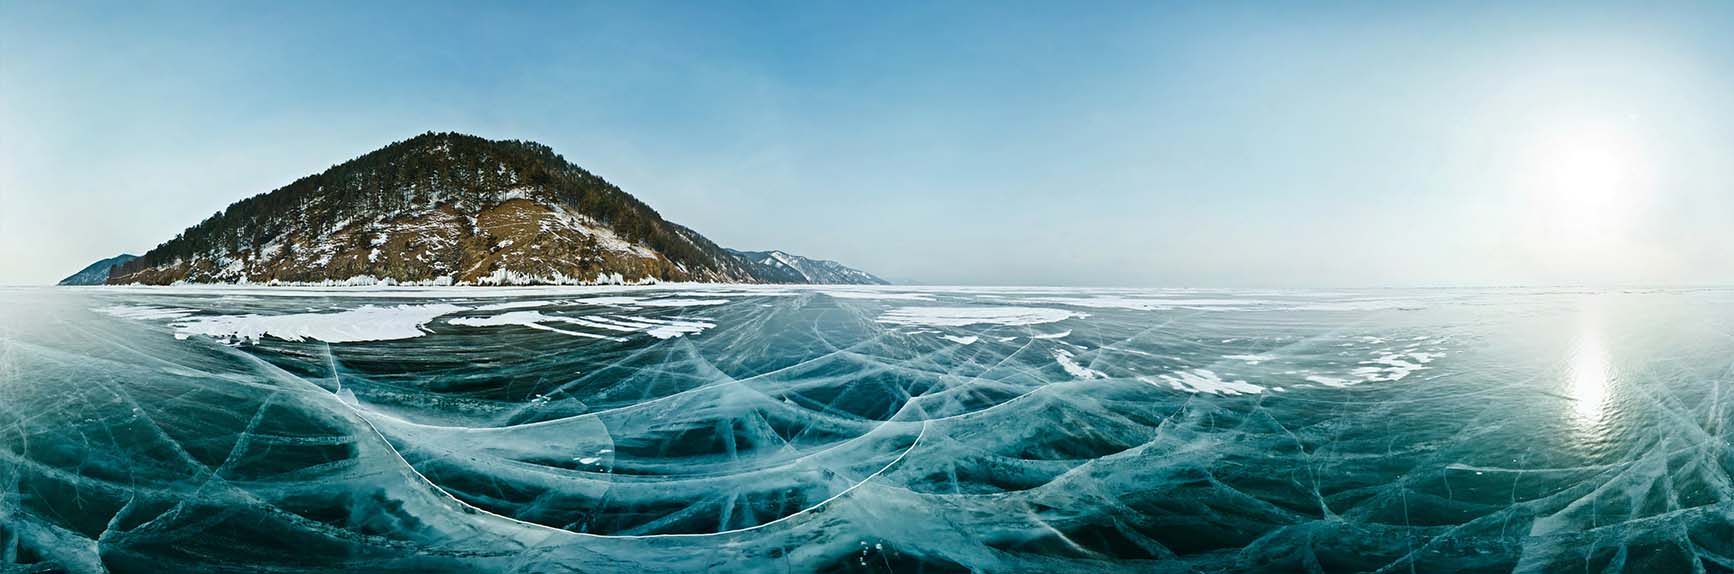 Ice lake Baikal